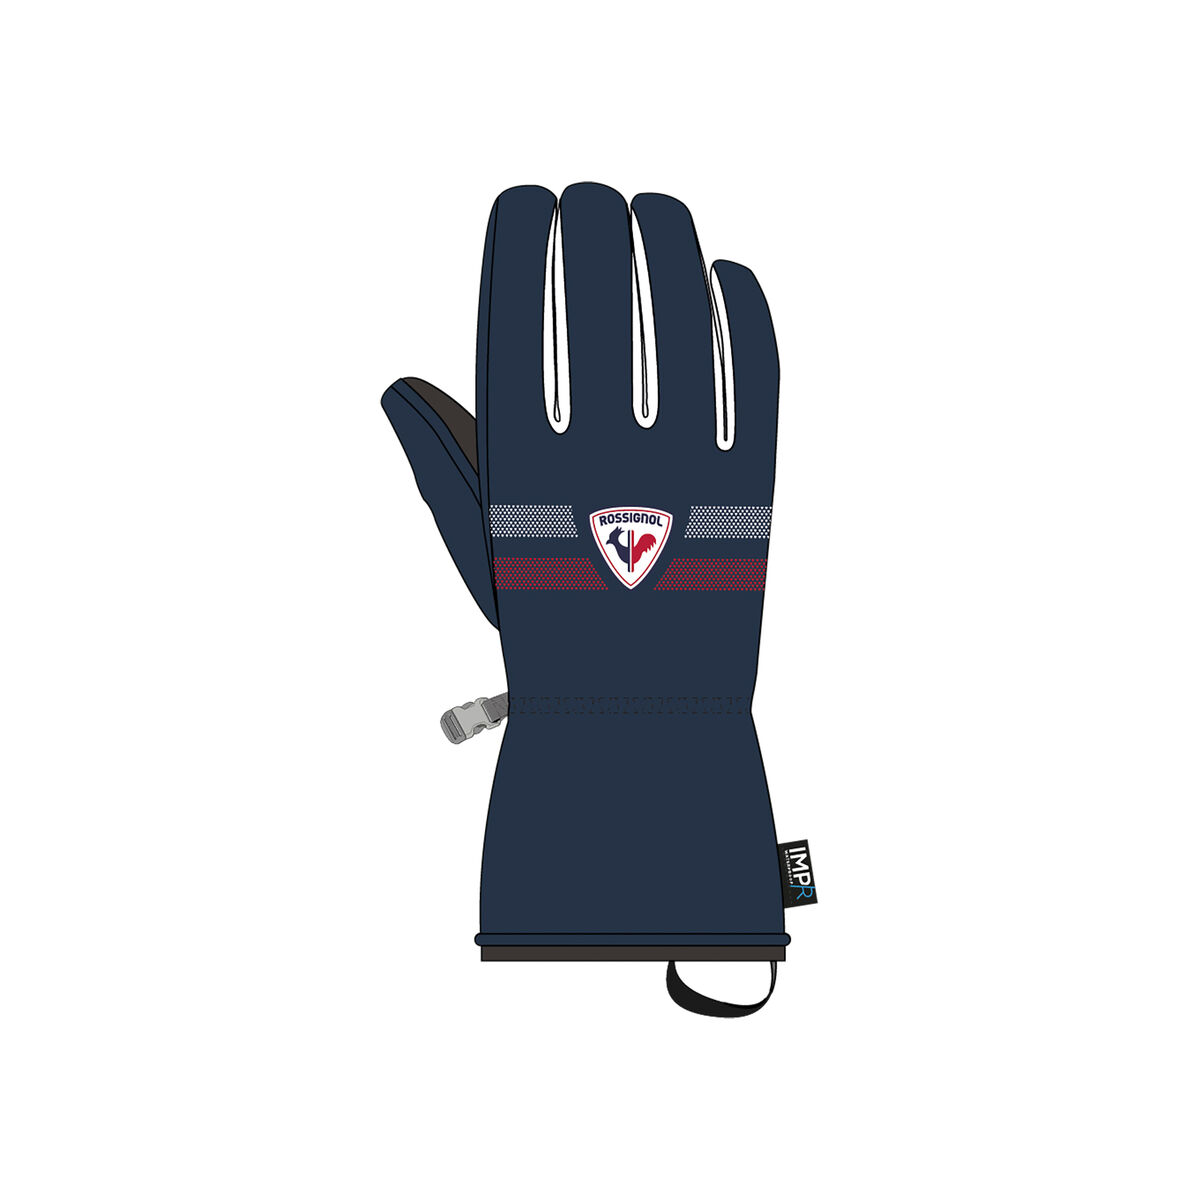 Juniors' ROC waterproof ski gloves